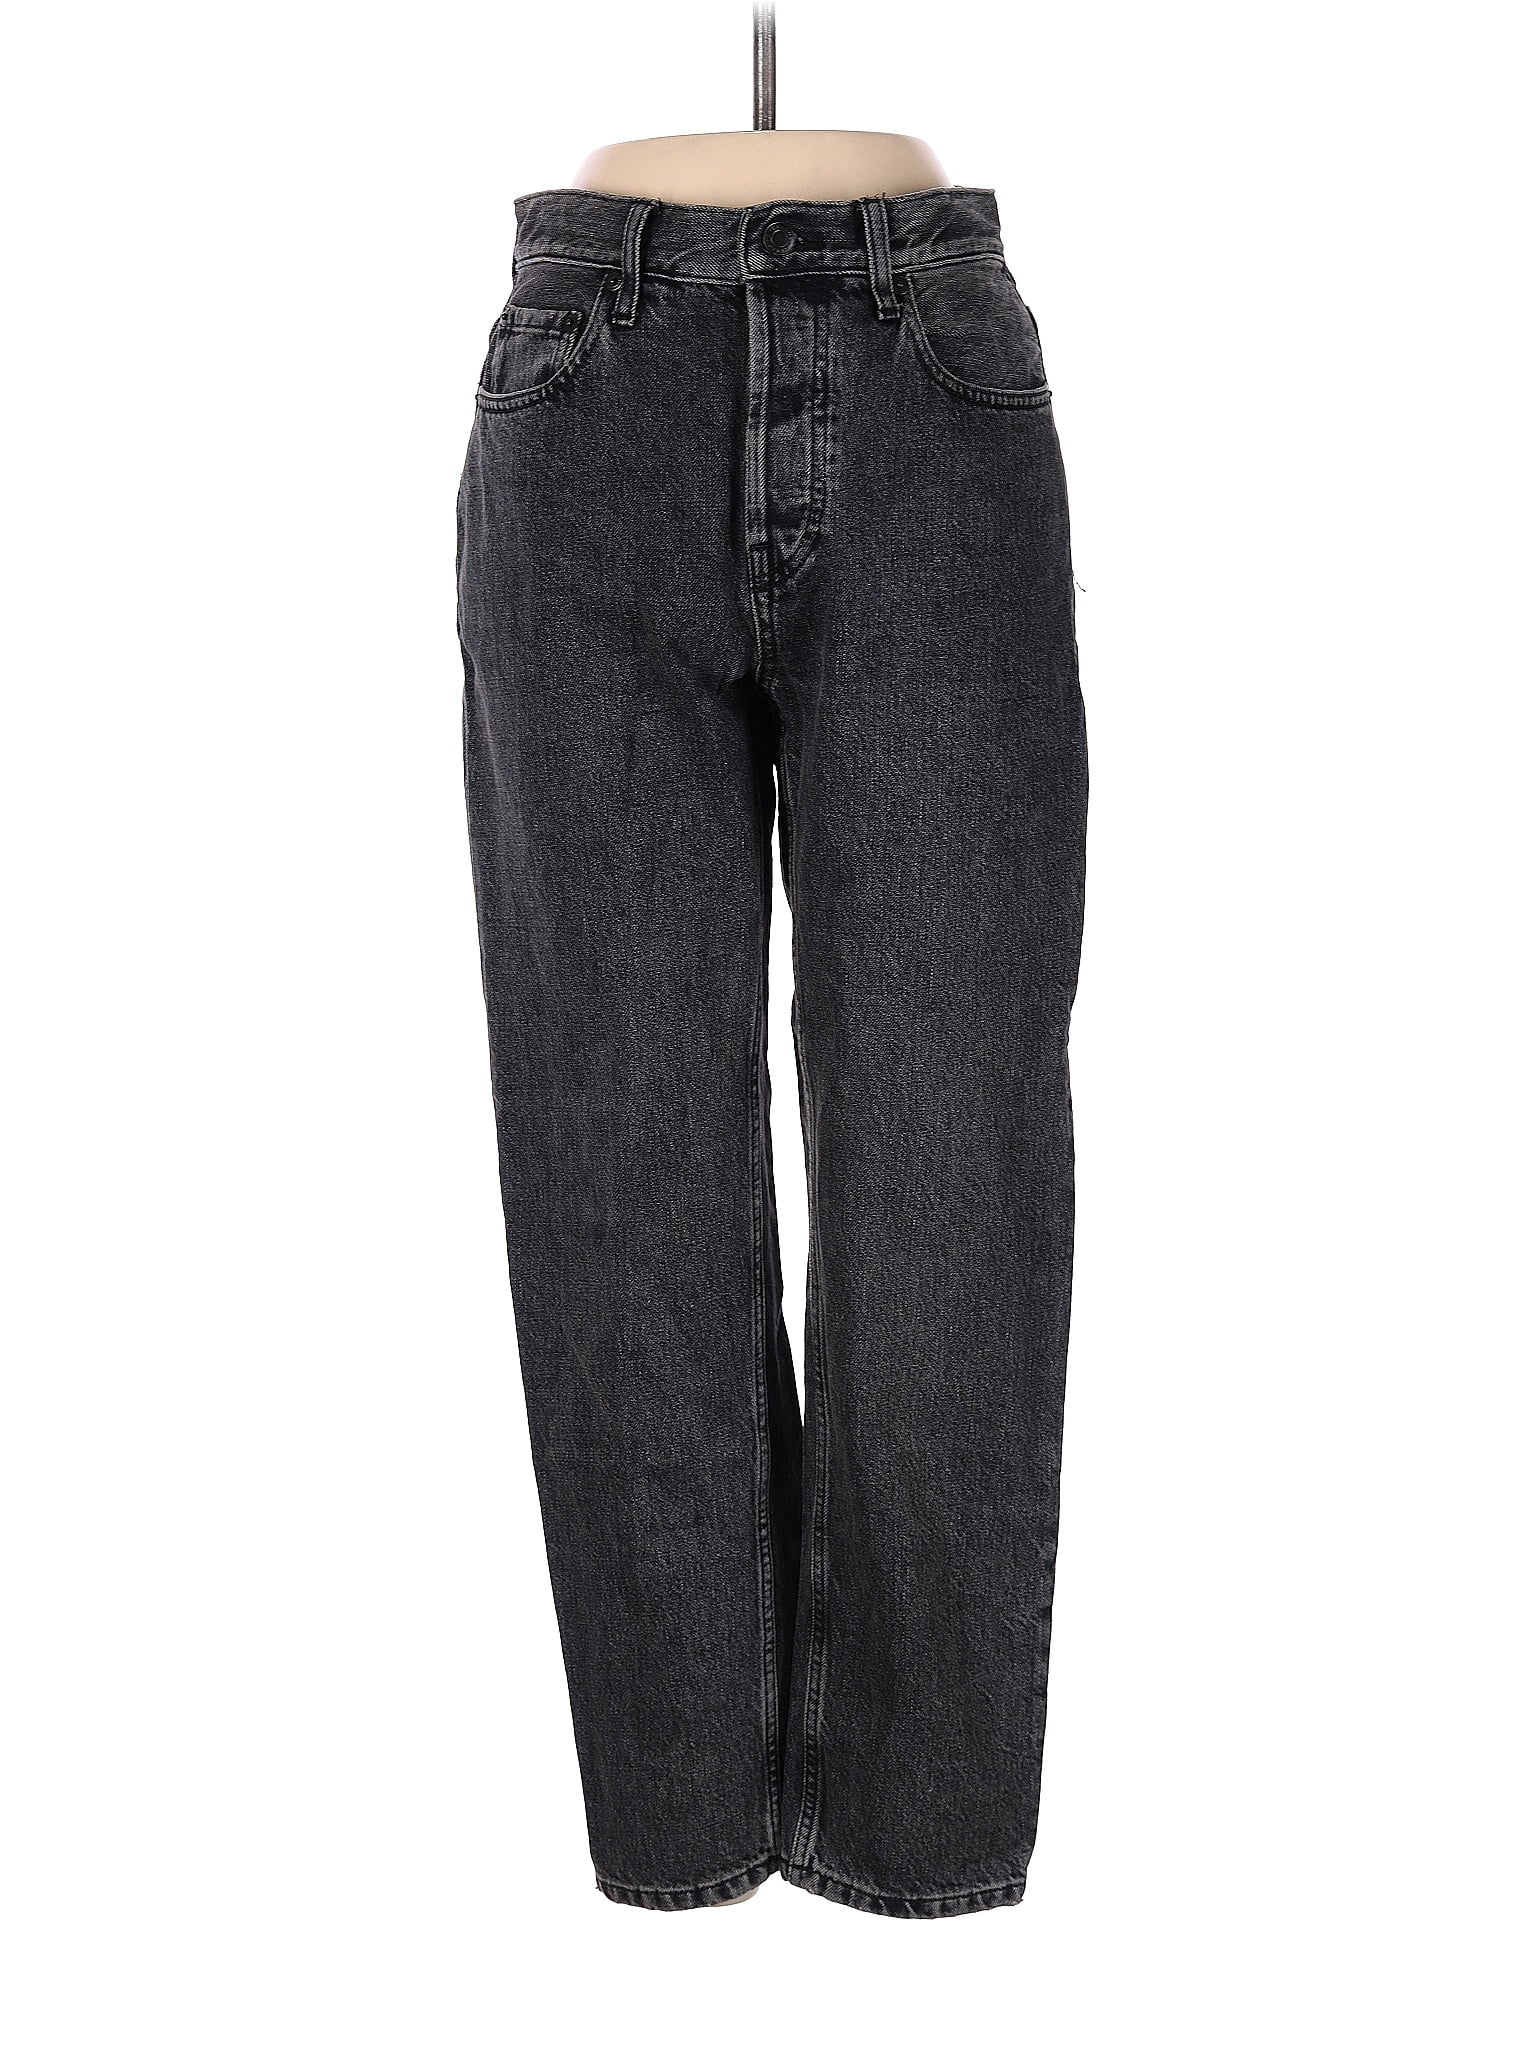 Everlane 100% Cotton Solid Gray Jeans 25 Waist - 56% off | thredUP